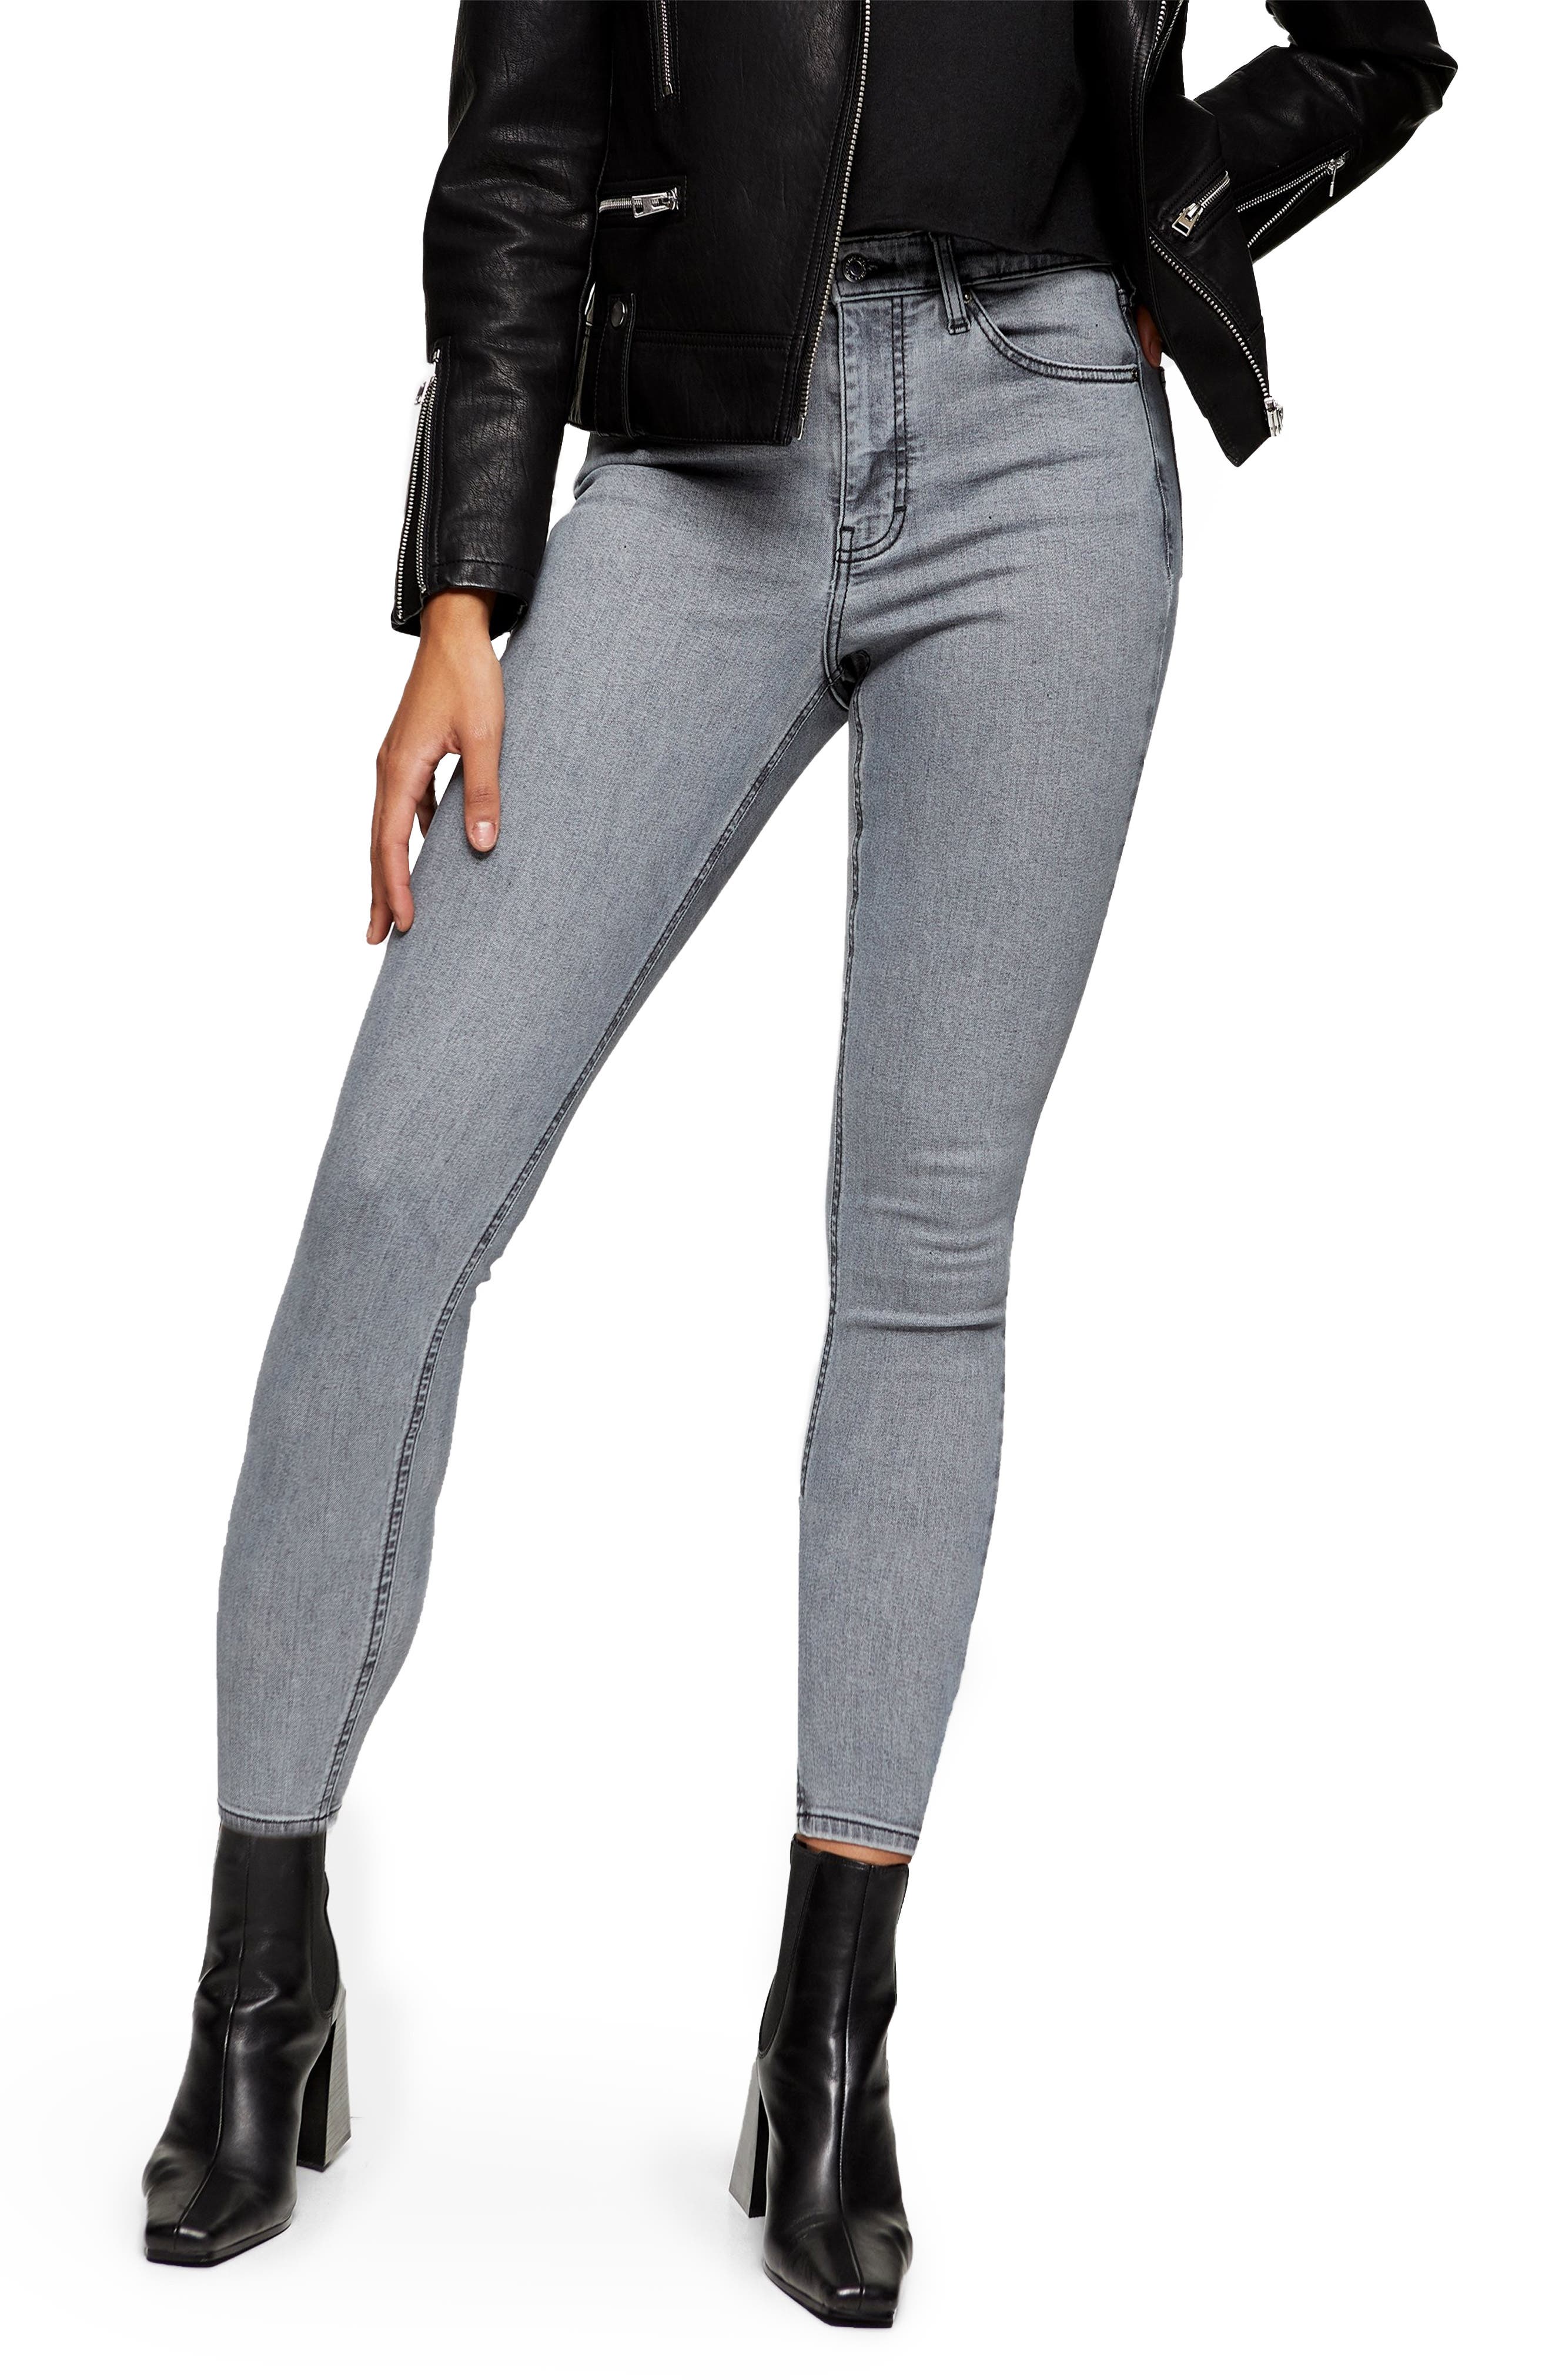 women's gray skinny jeans